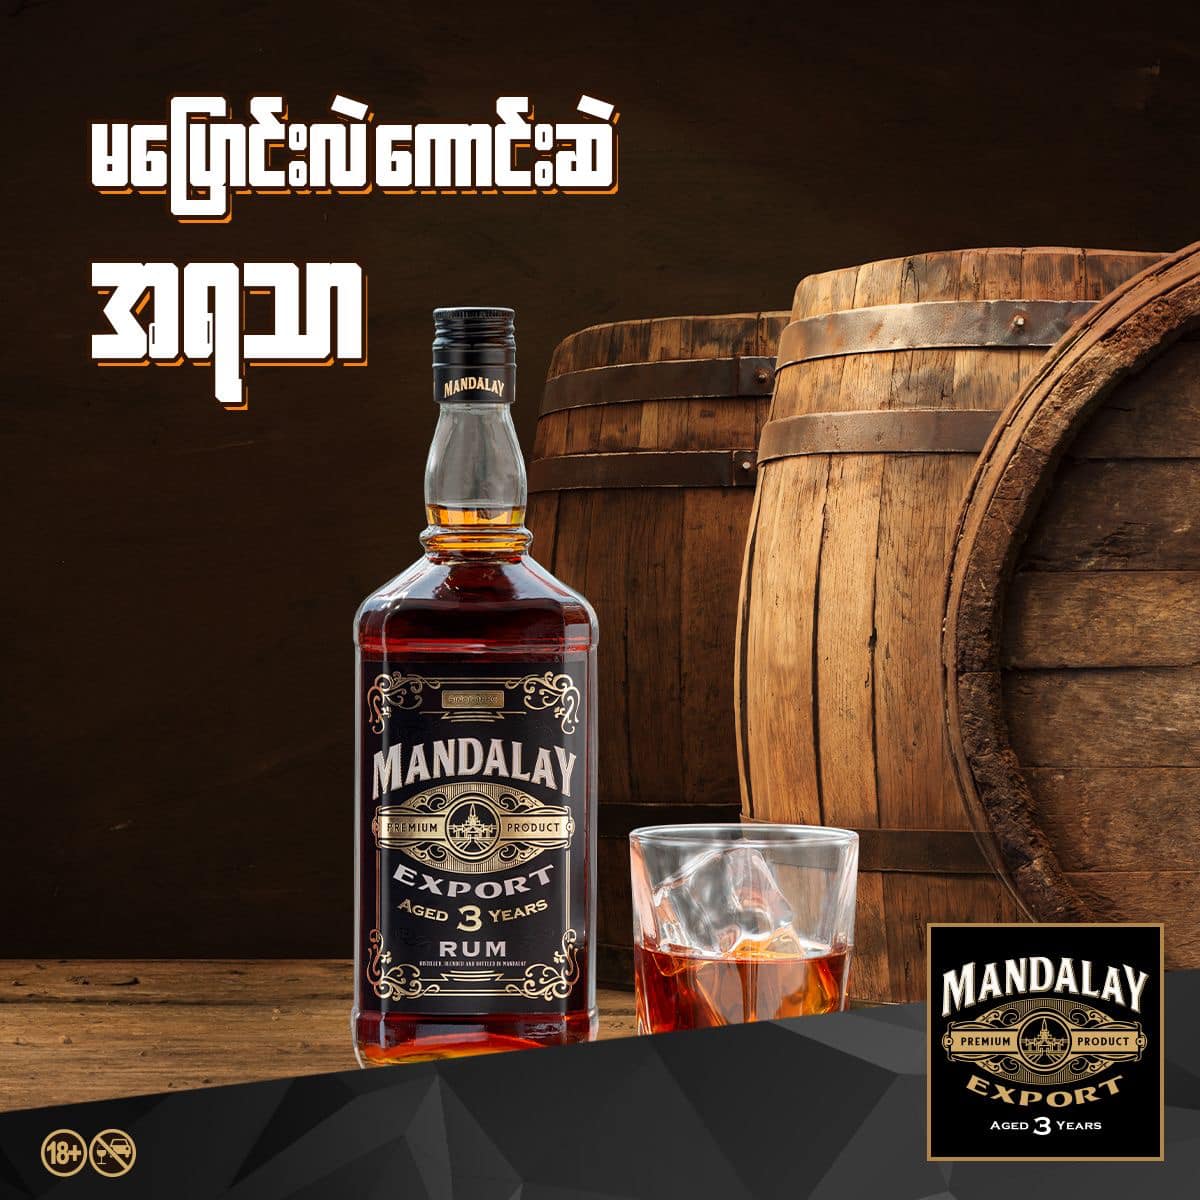 mandalay export rum